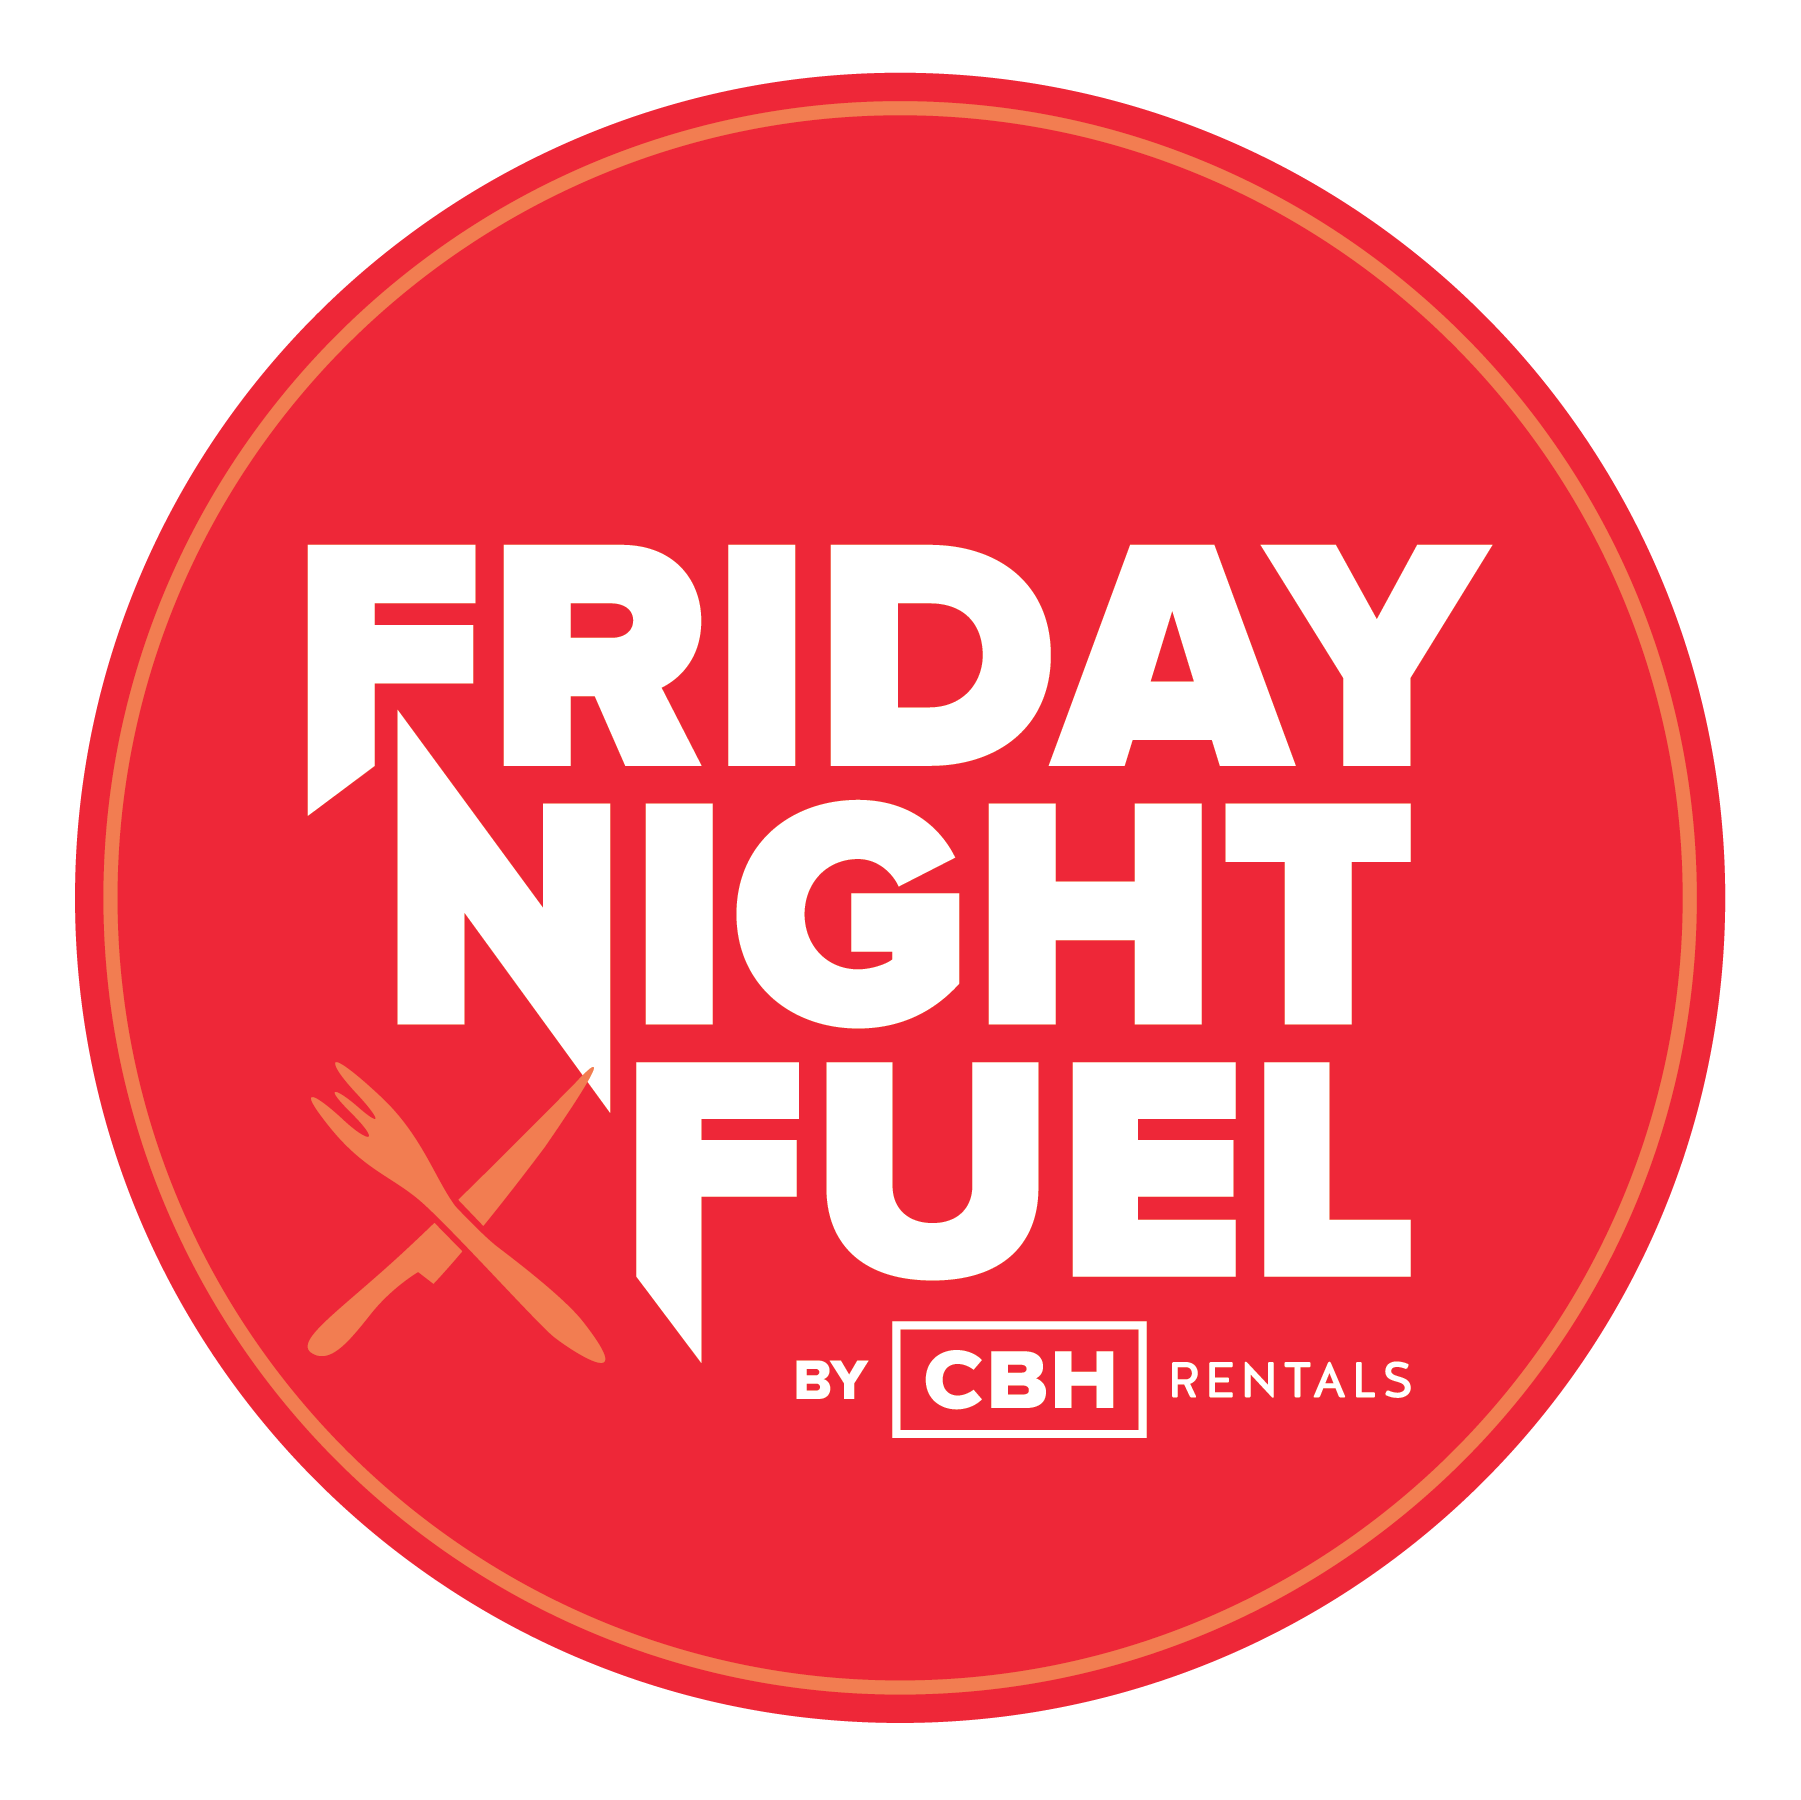 Friday Night Fuel by CBH Rentals